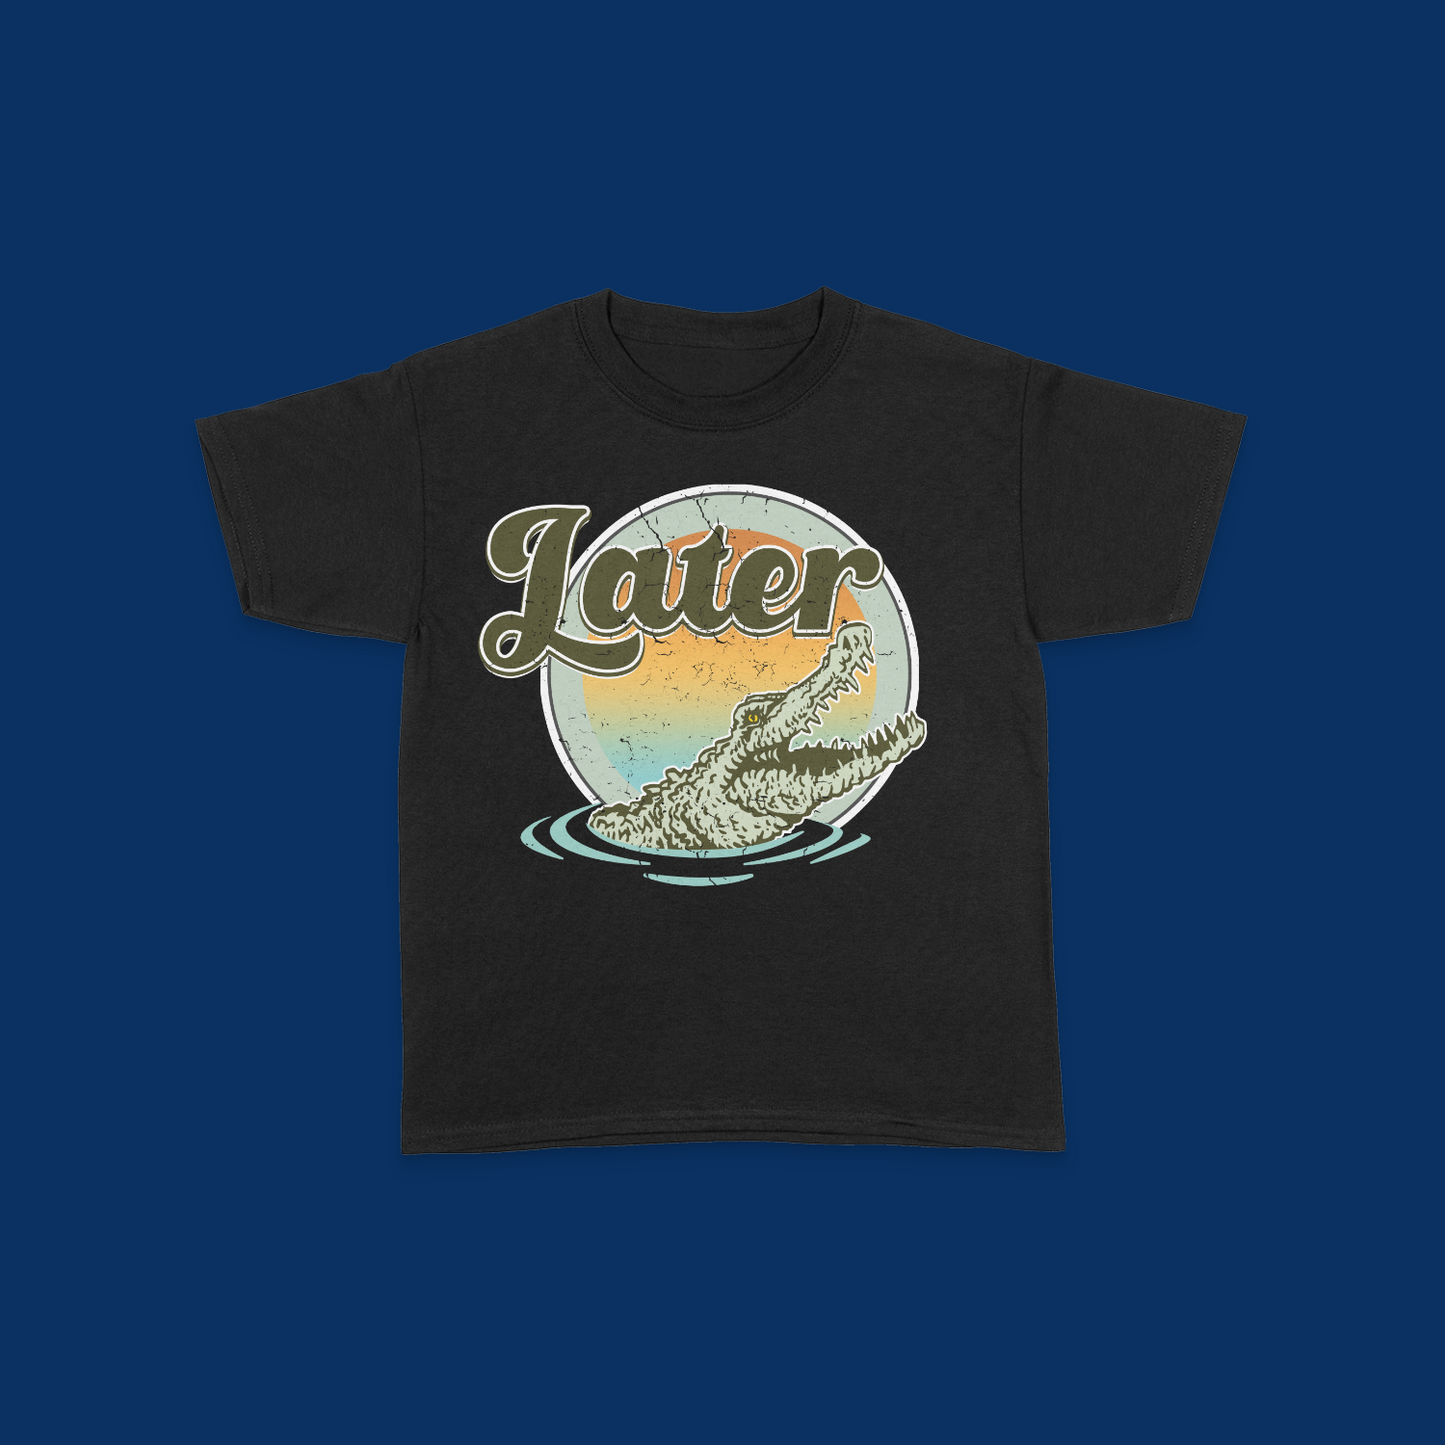 Later, Gator Kids T-Shirt